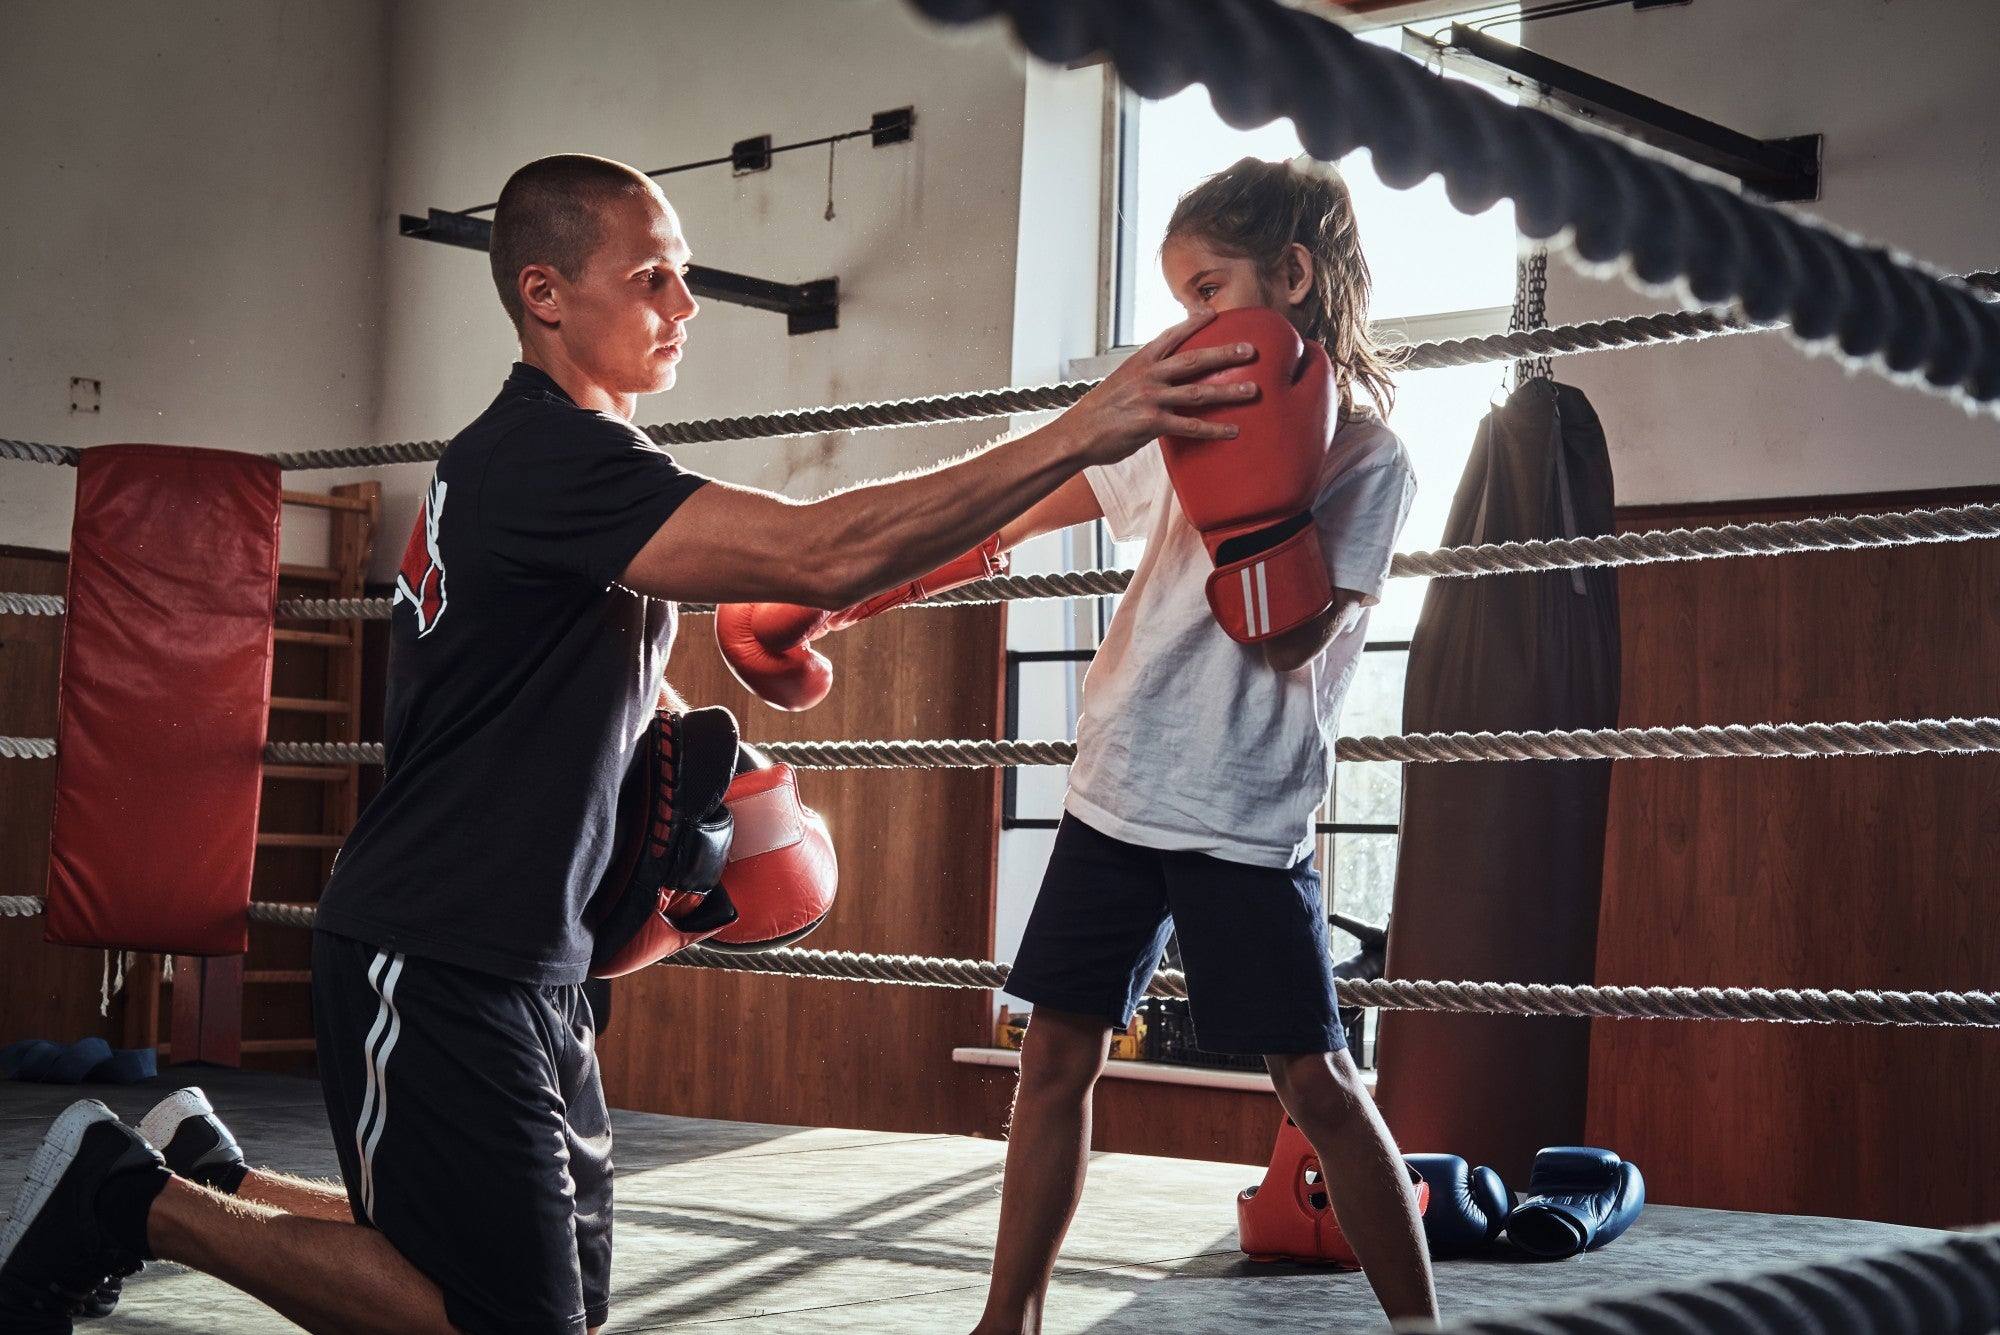 Boxing Training: The Benefits Of Training Alone